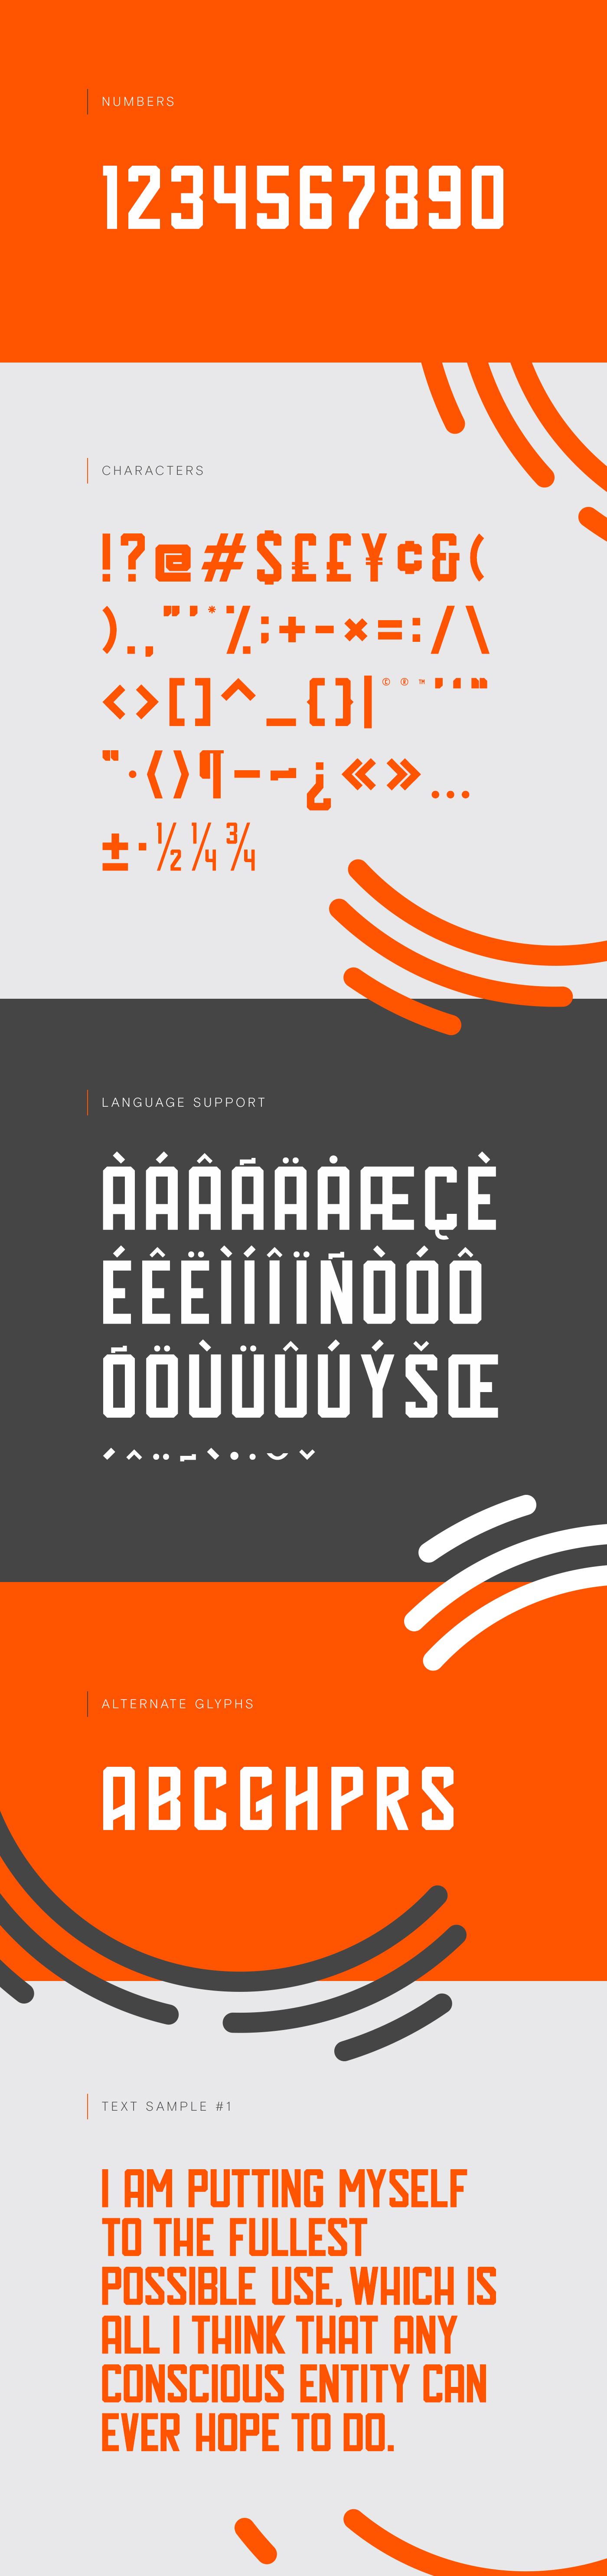 font type Typeface condensed bold free Headline multilingual Free font sans